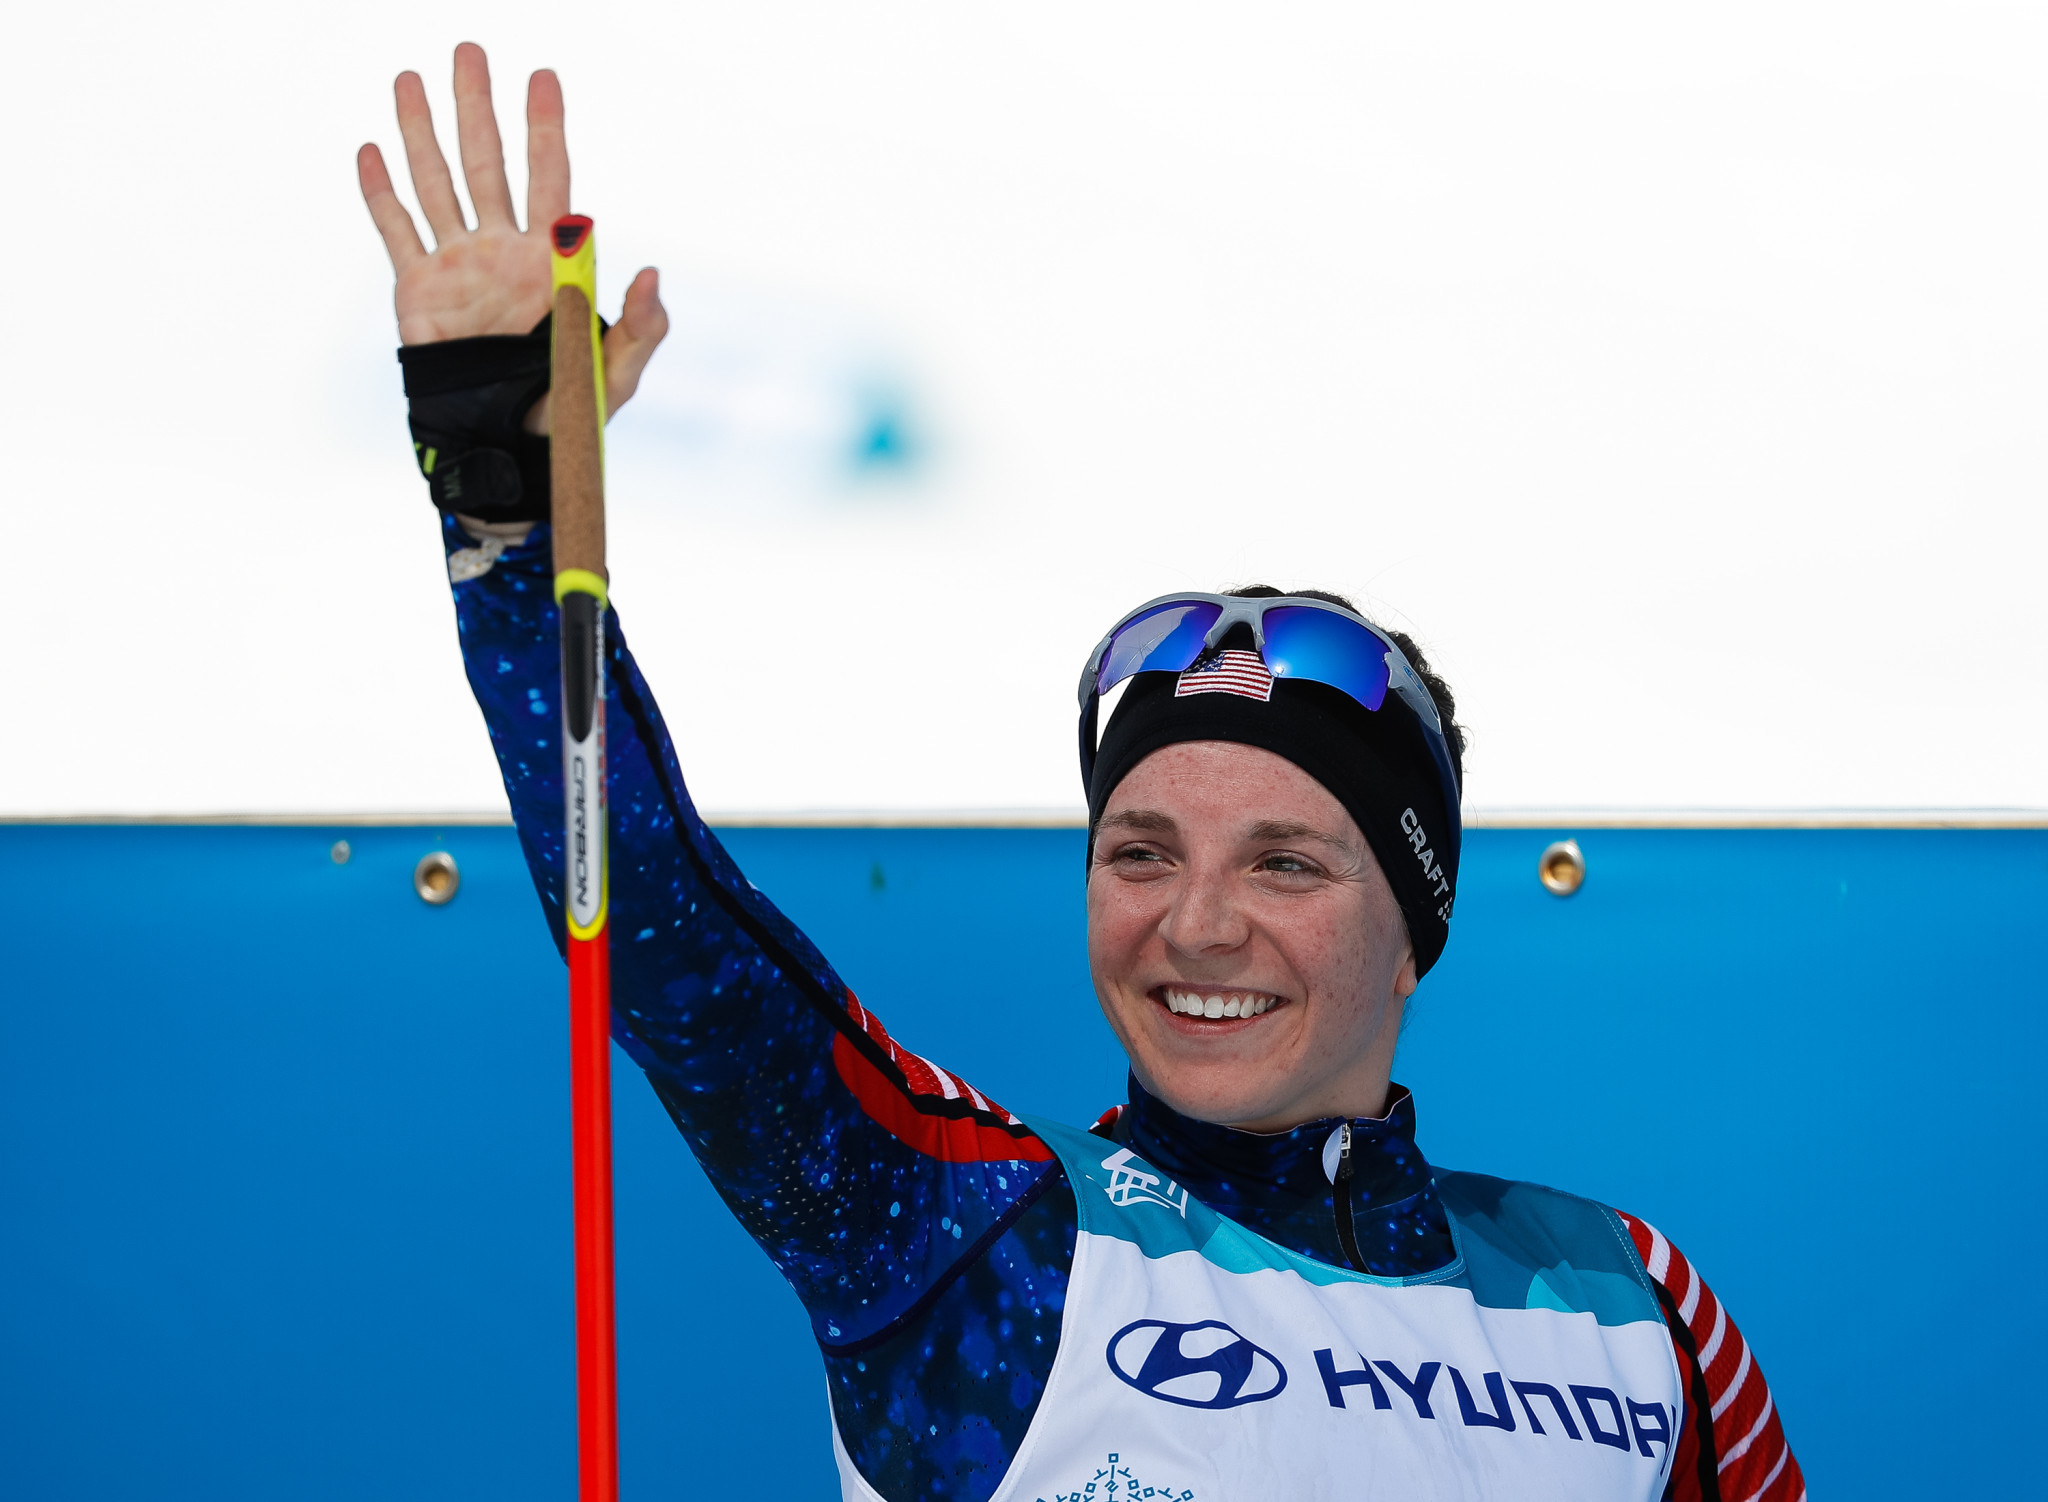 Kendall Gretsch won twice in biathlon ©Getty Images